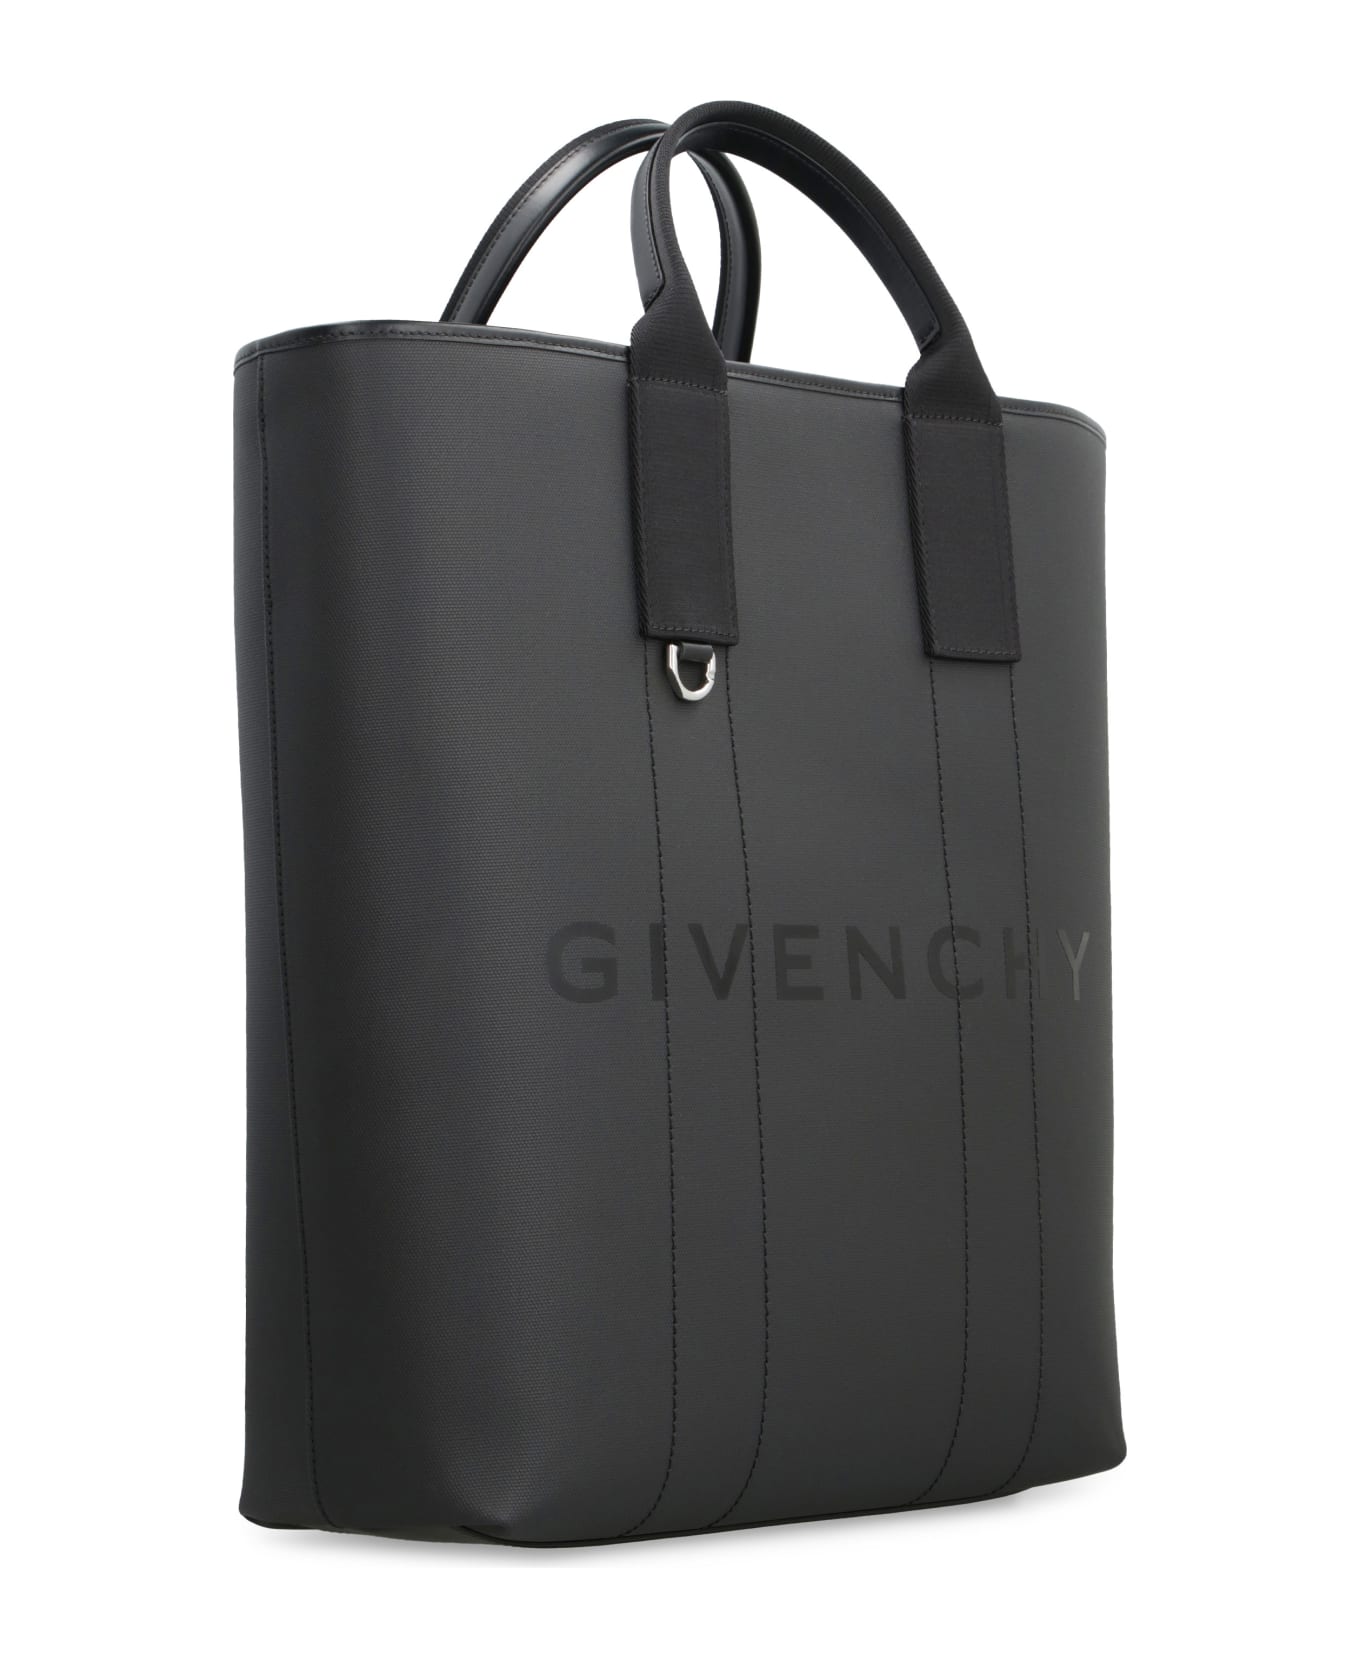 Givenchy G-essentials Canvas Tote Bag - Black